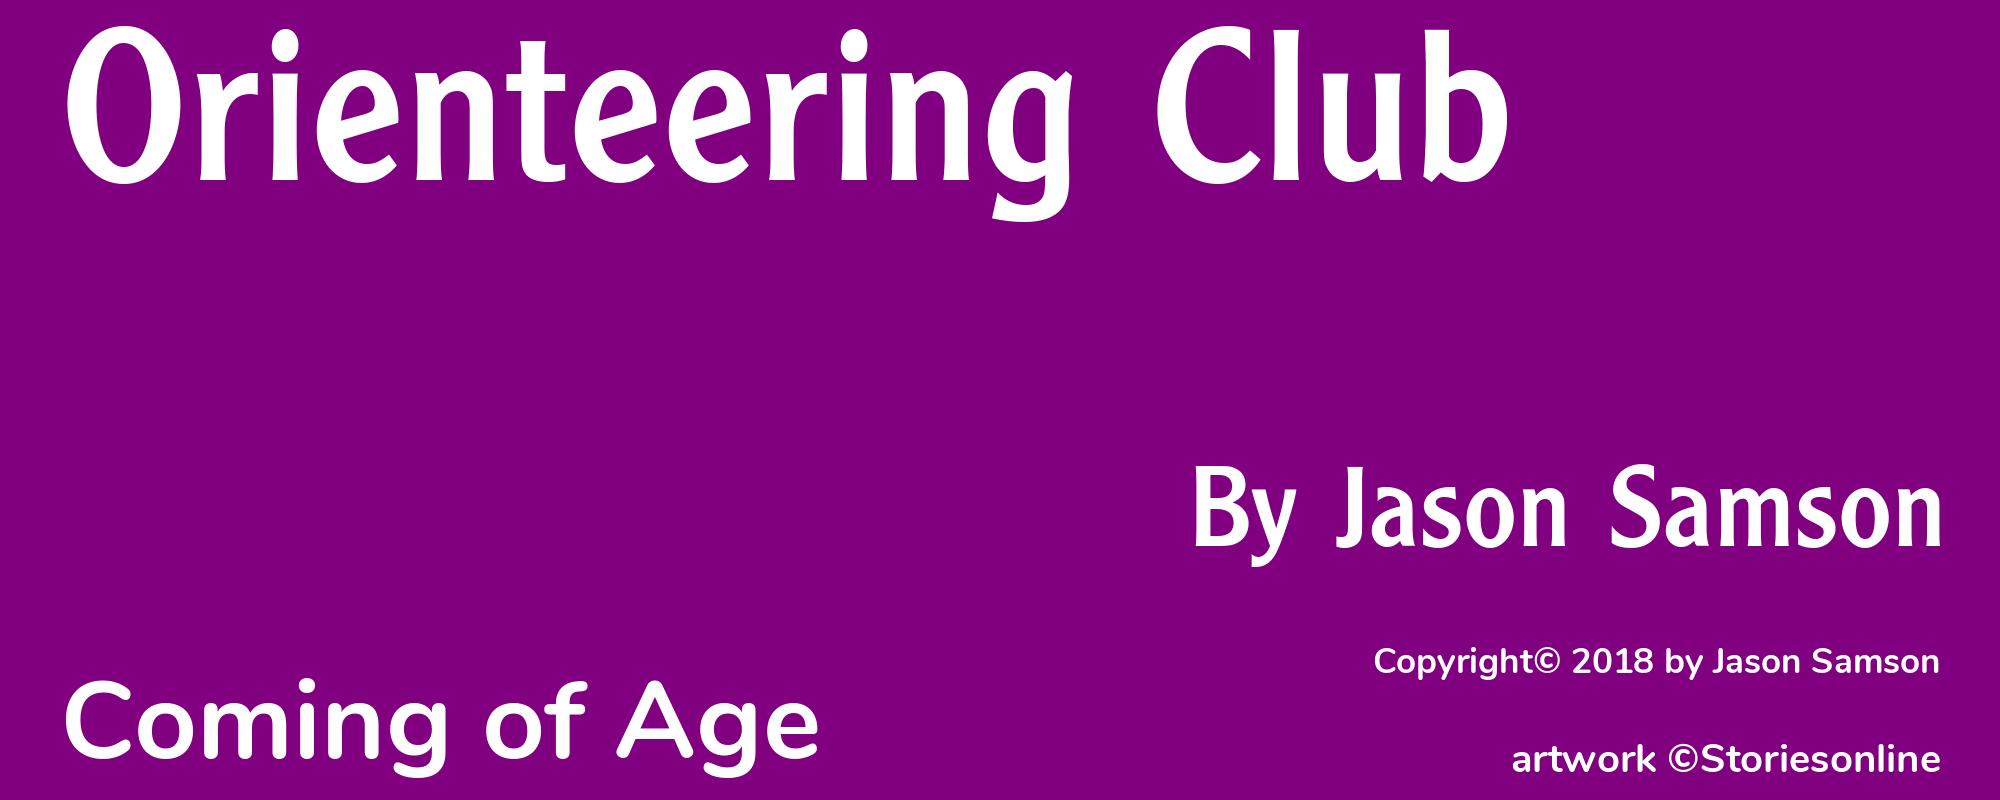 Orienteering Club - Cover